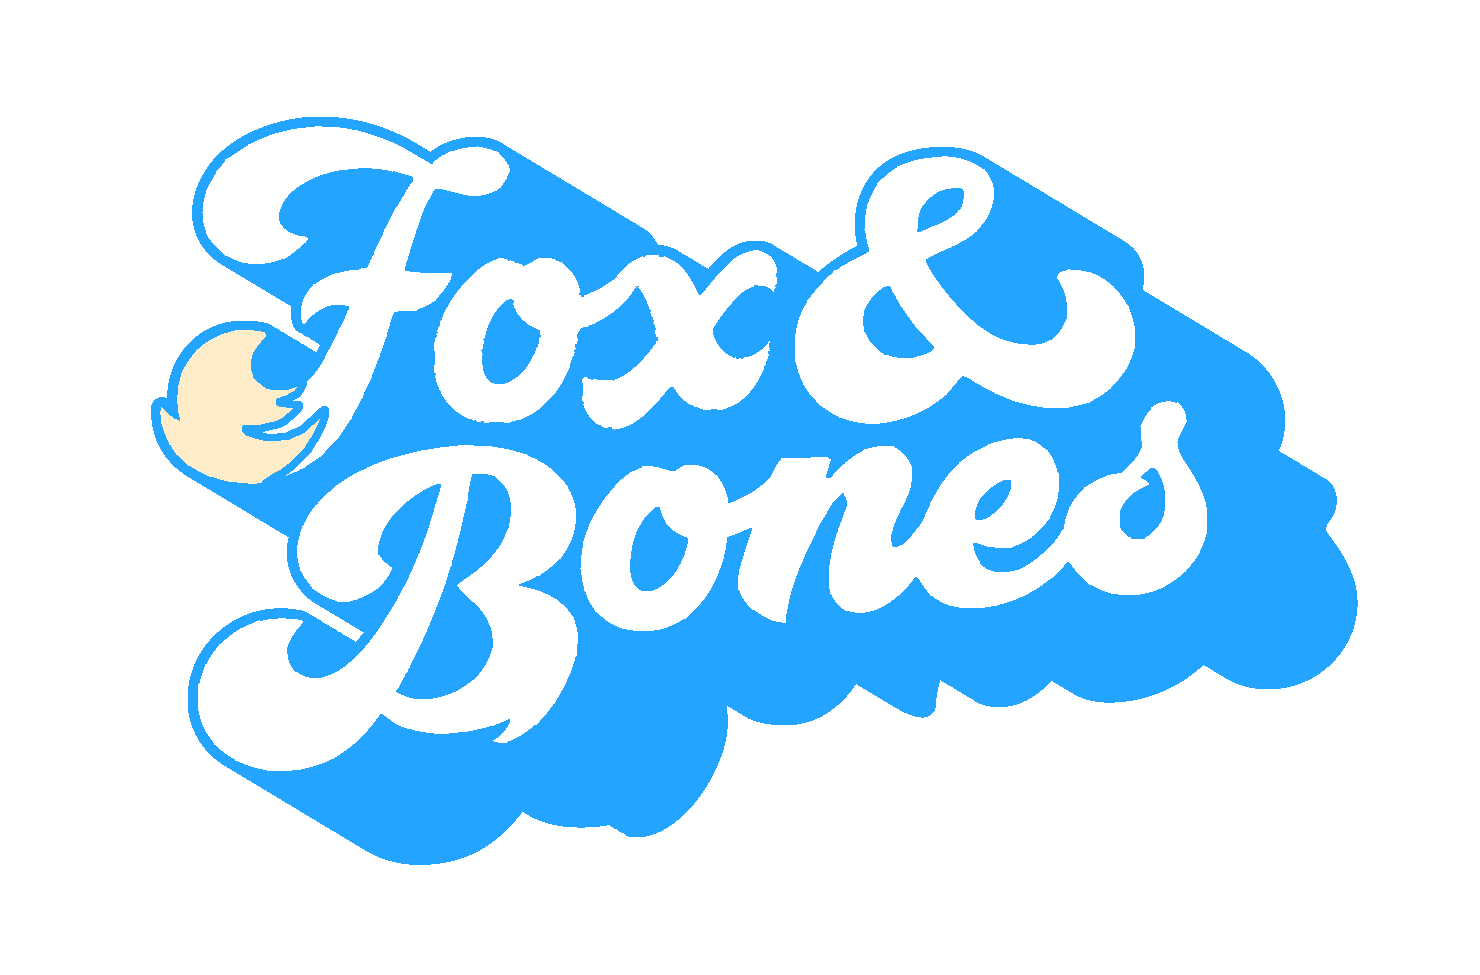 FOX AND BONES